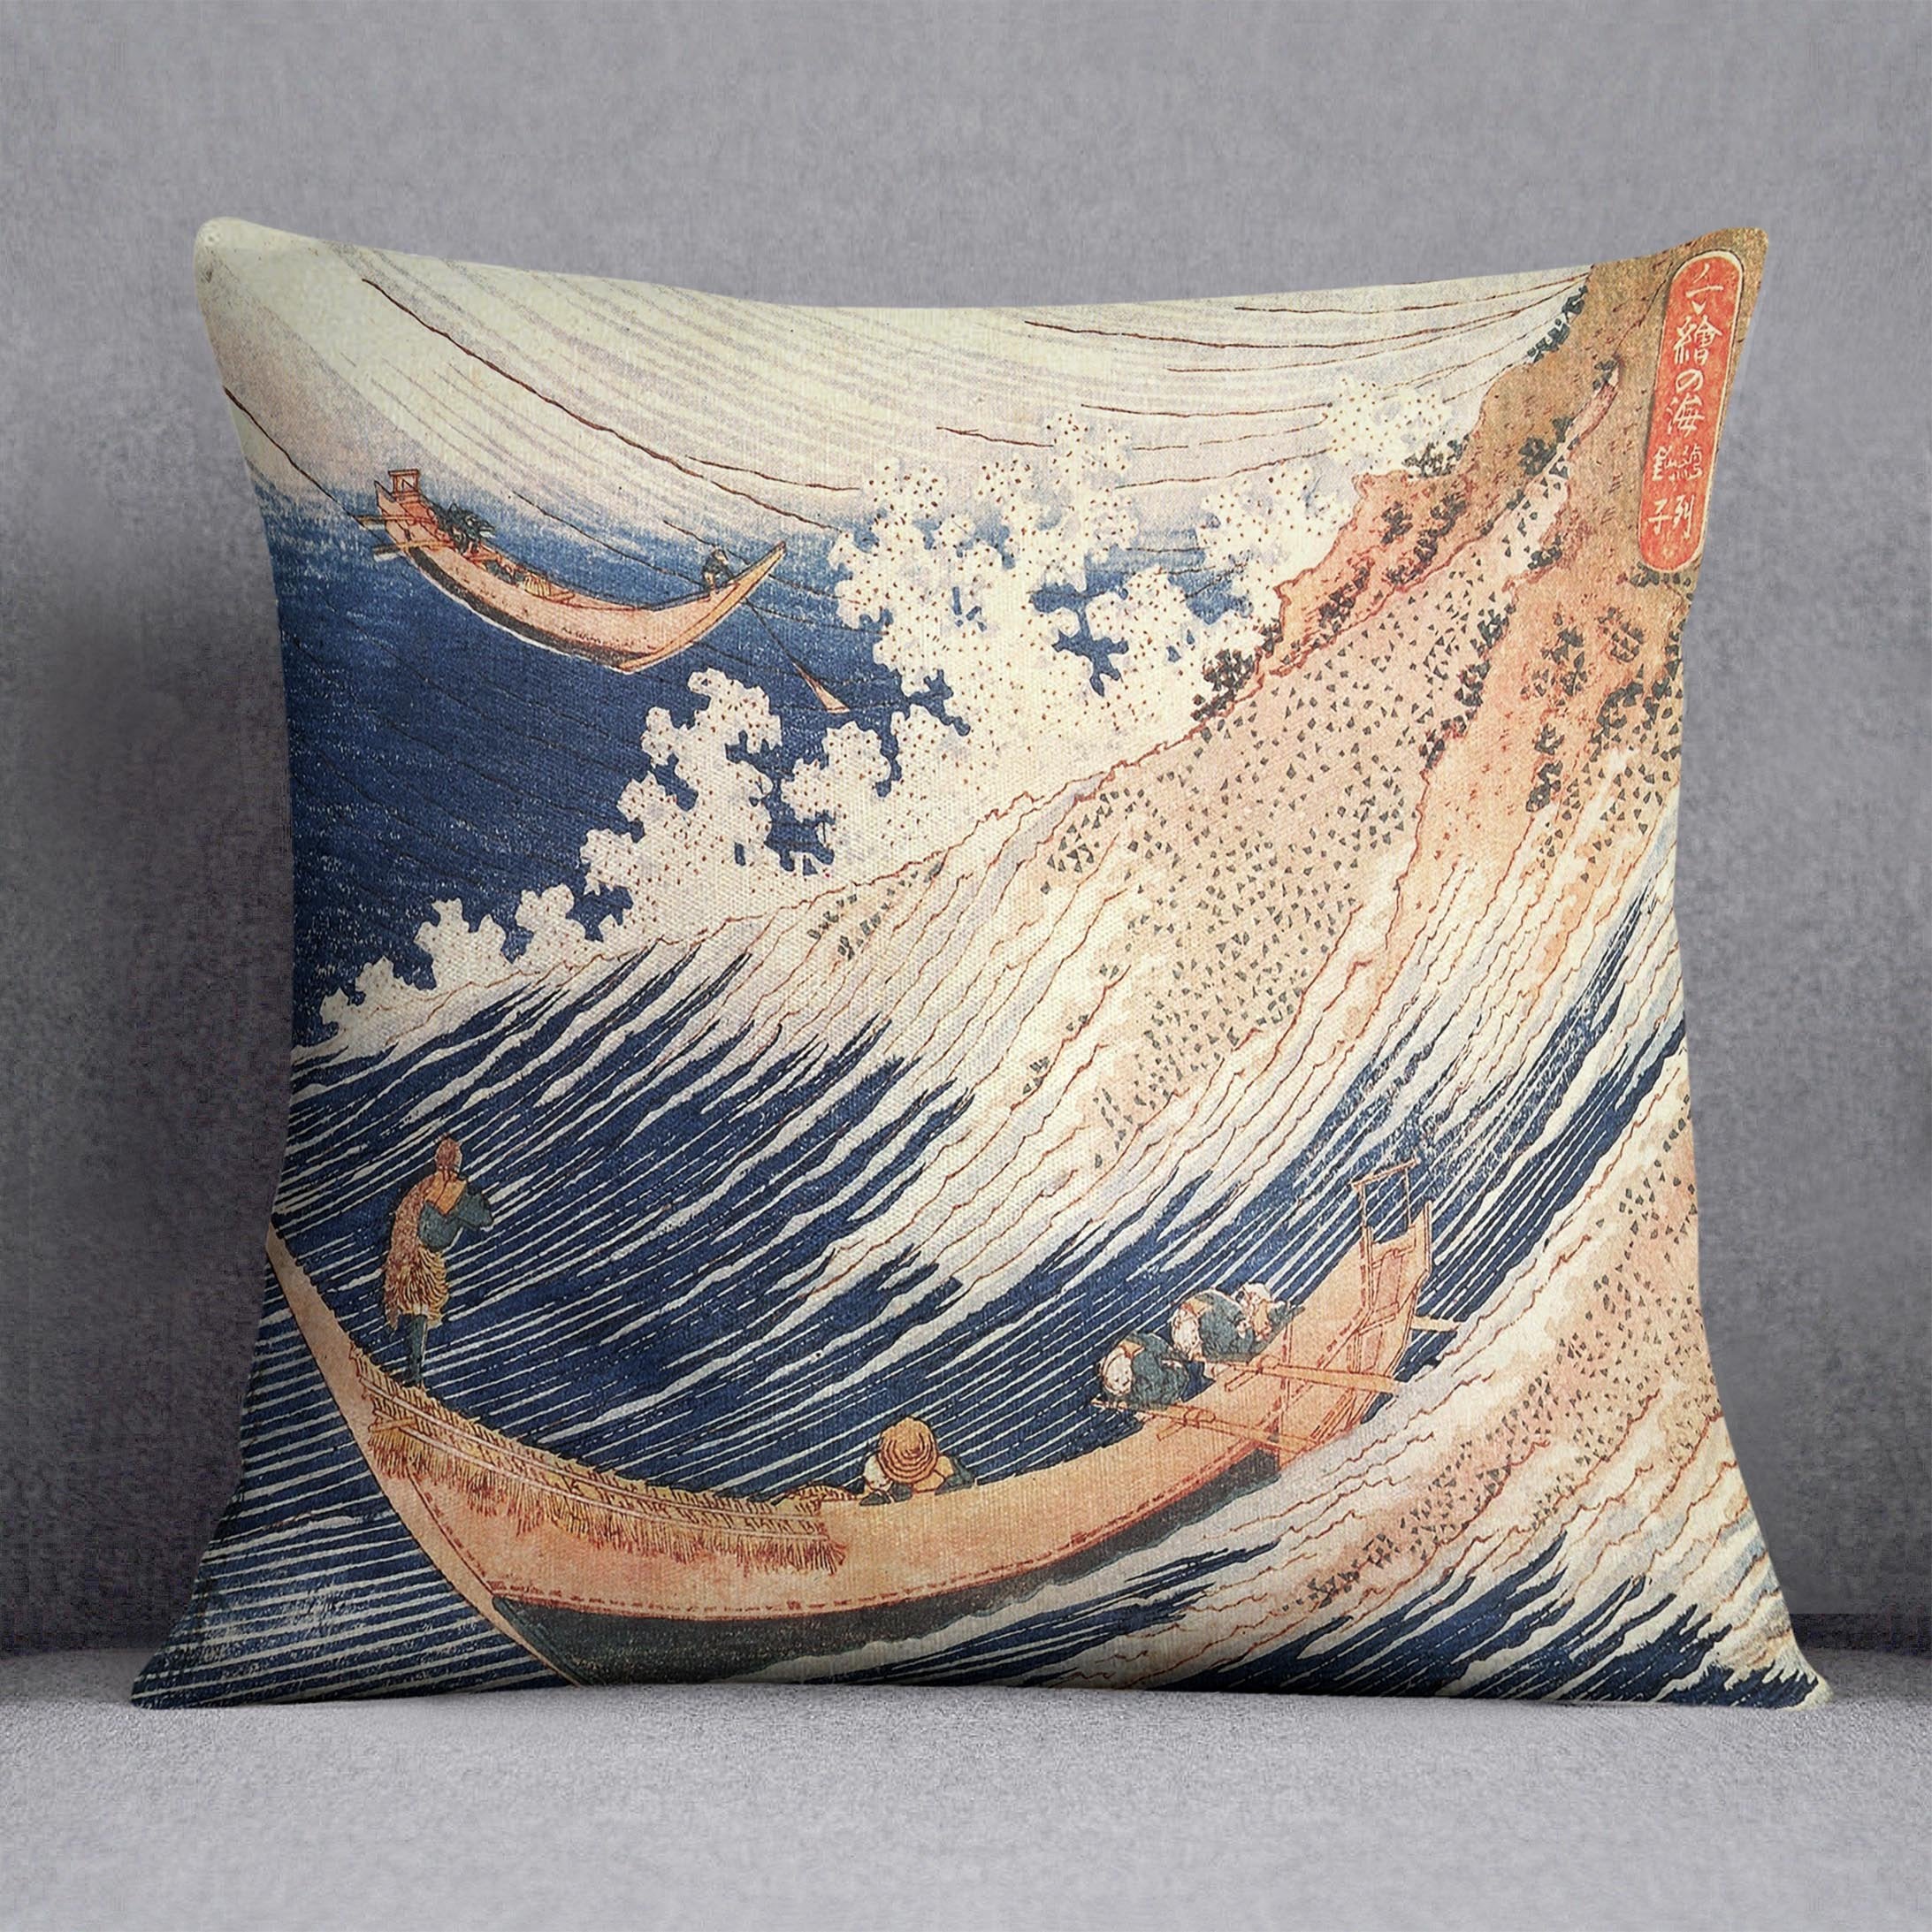 A Wild Sea at Choshi by Hokusai Throw Pillow